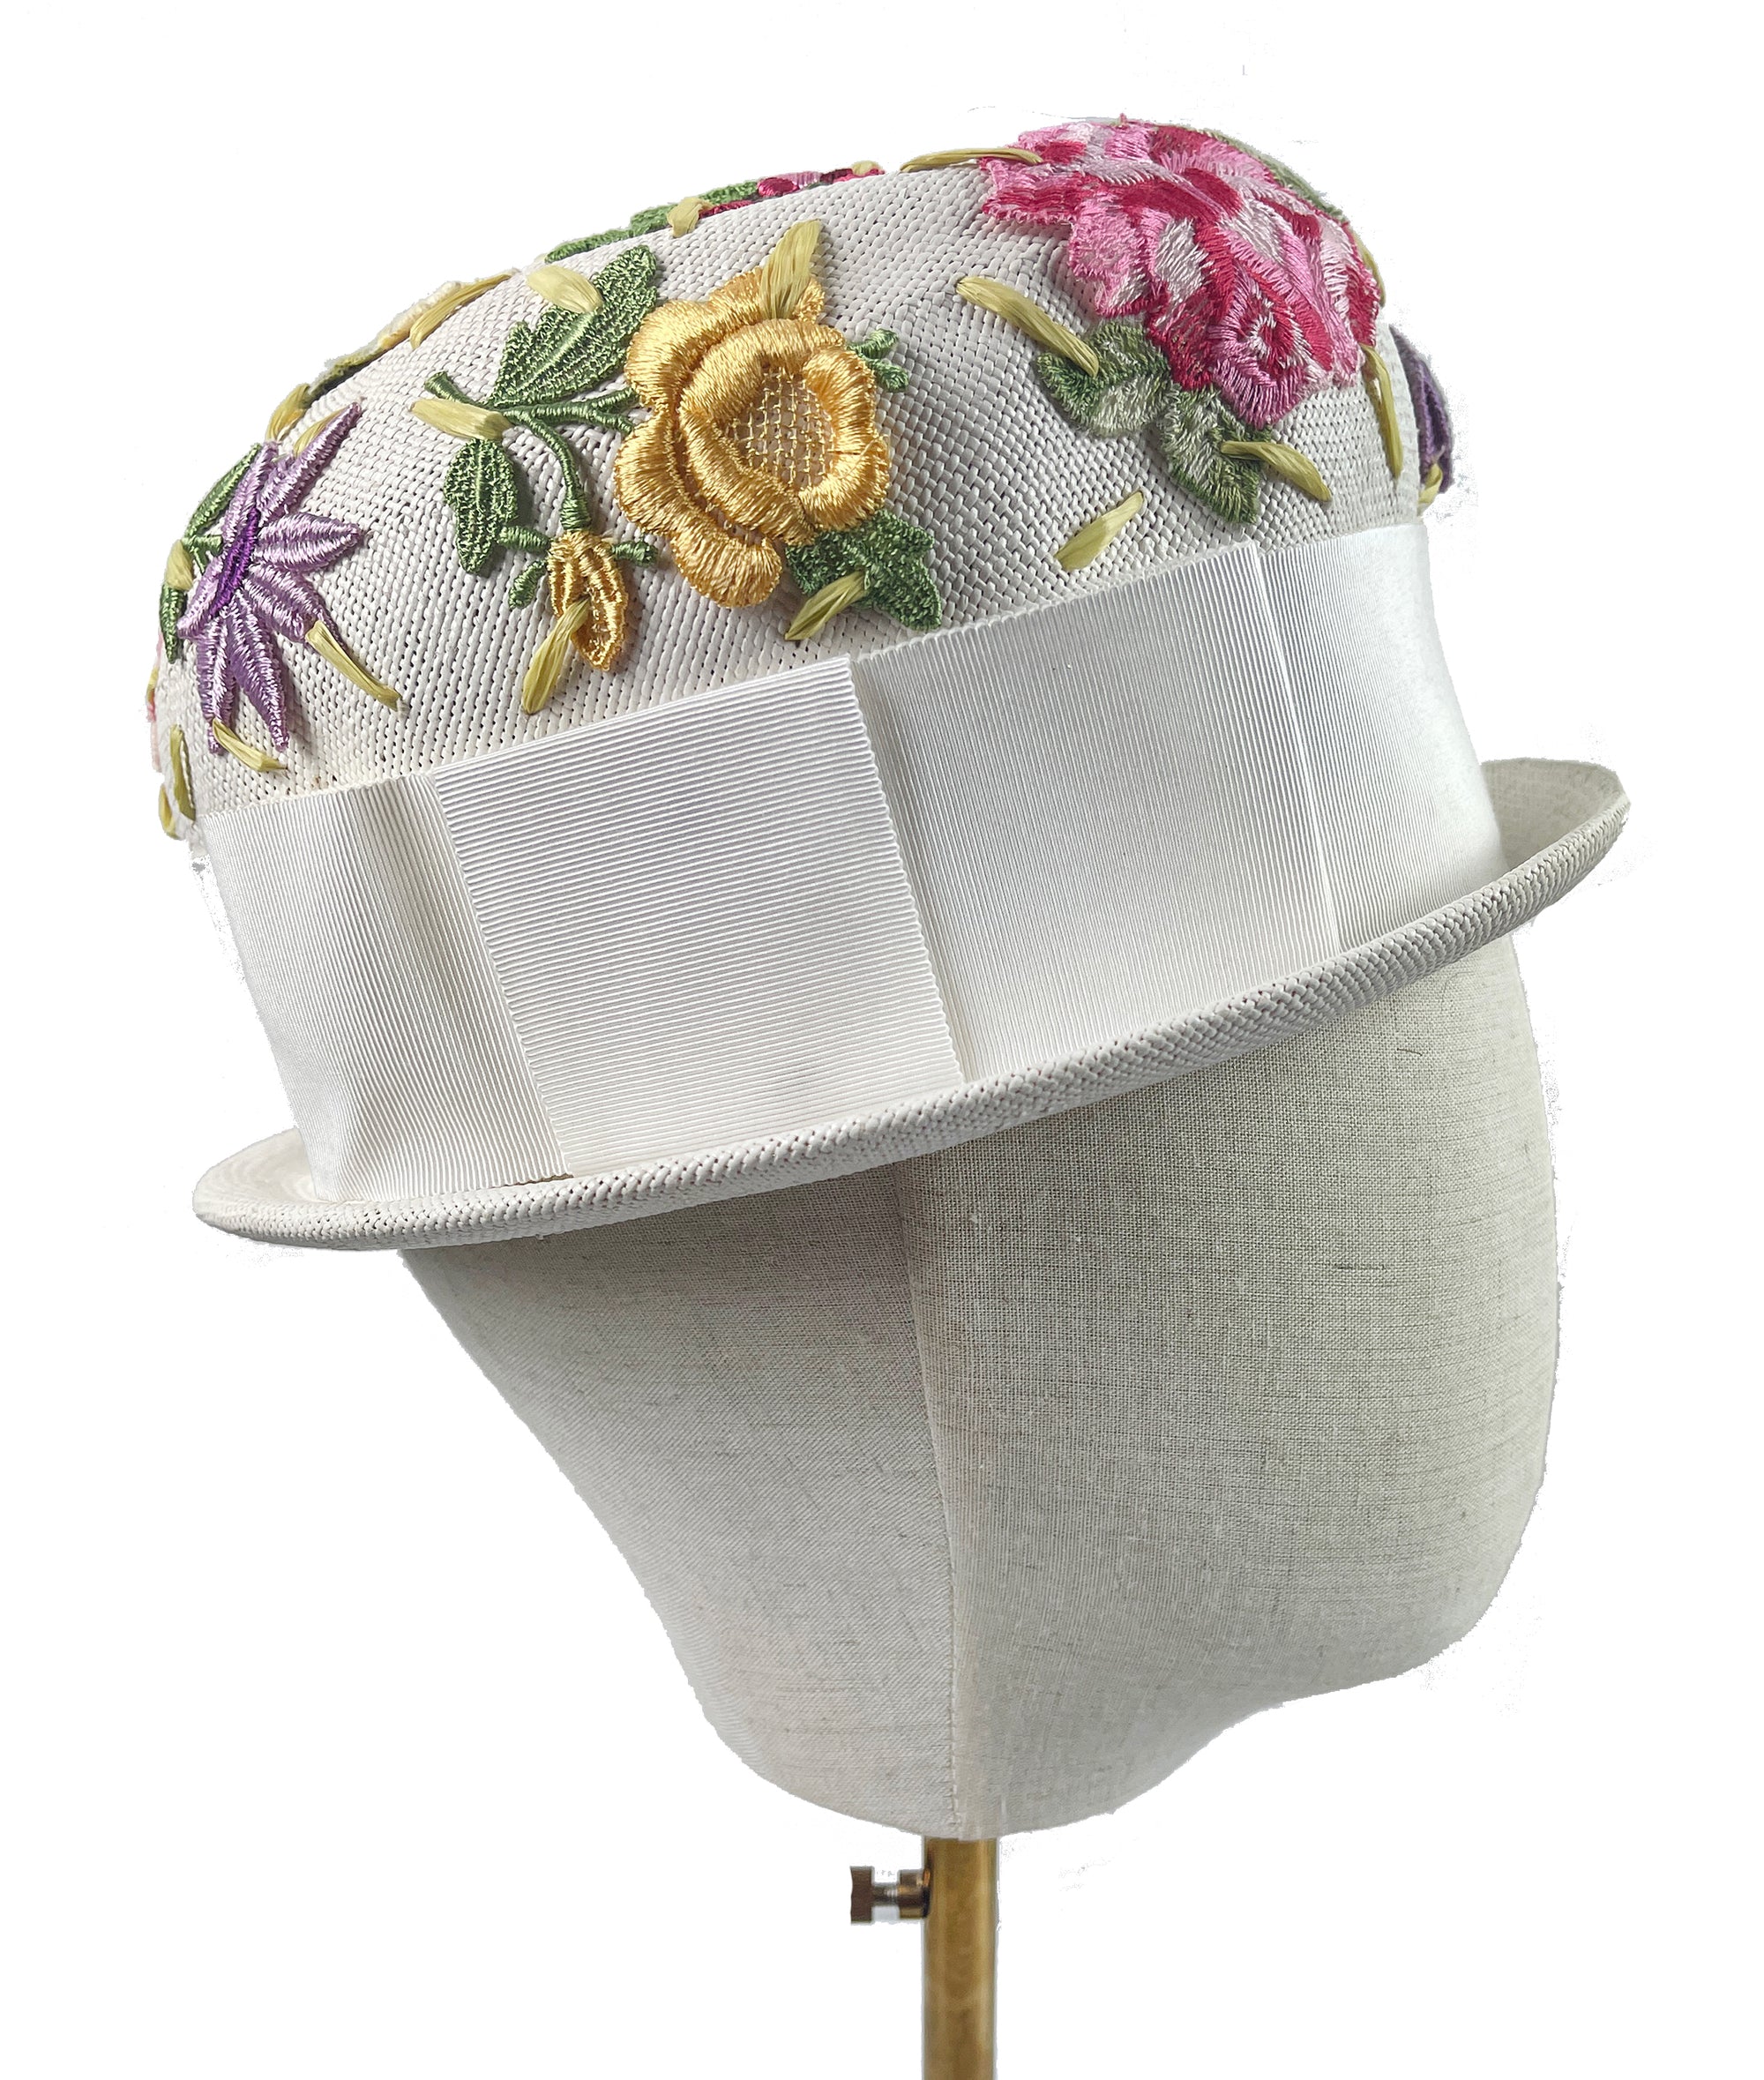 Vintage Joseph Magnin Flower Applique Bucket Hat Size 22